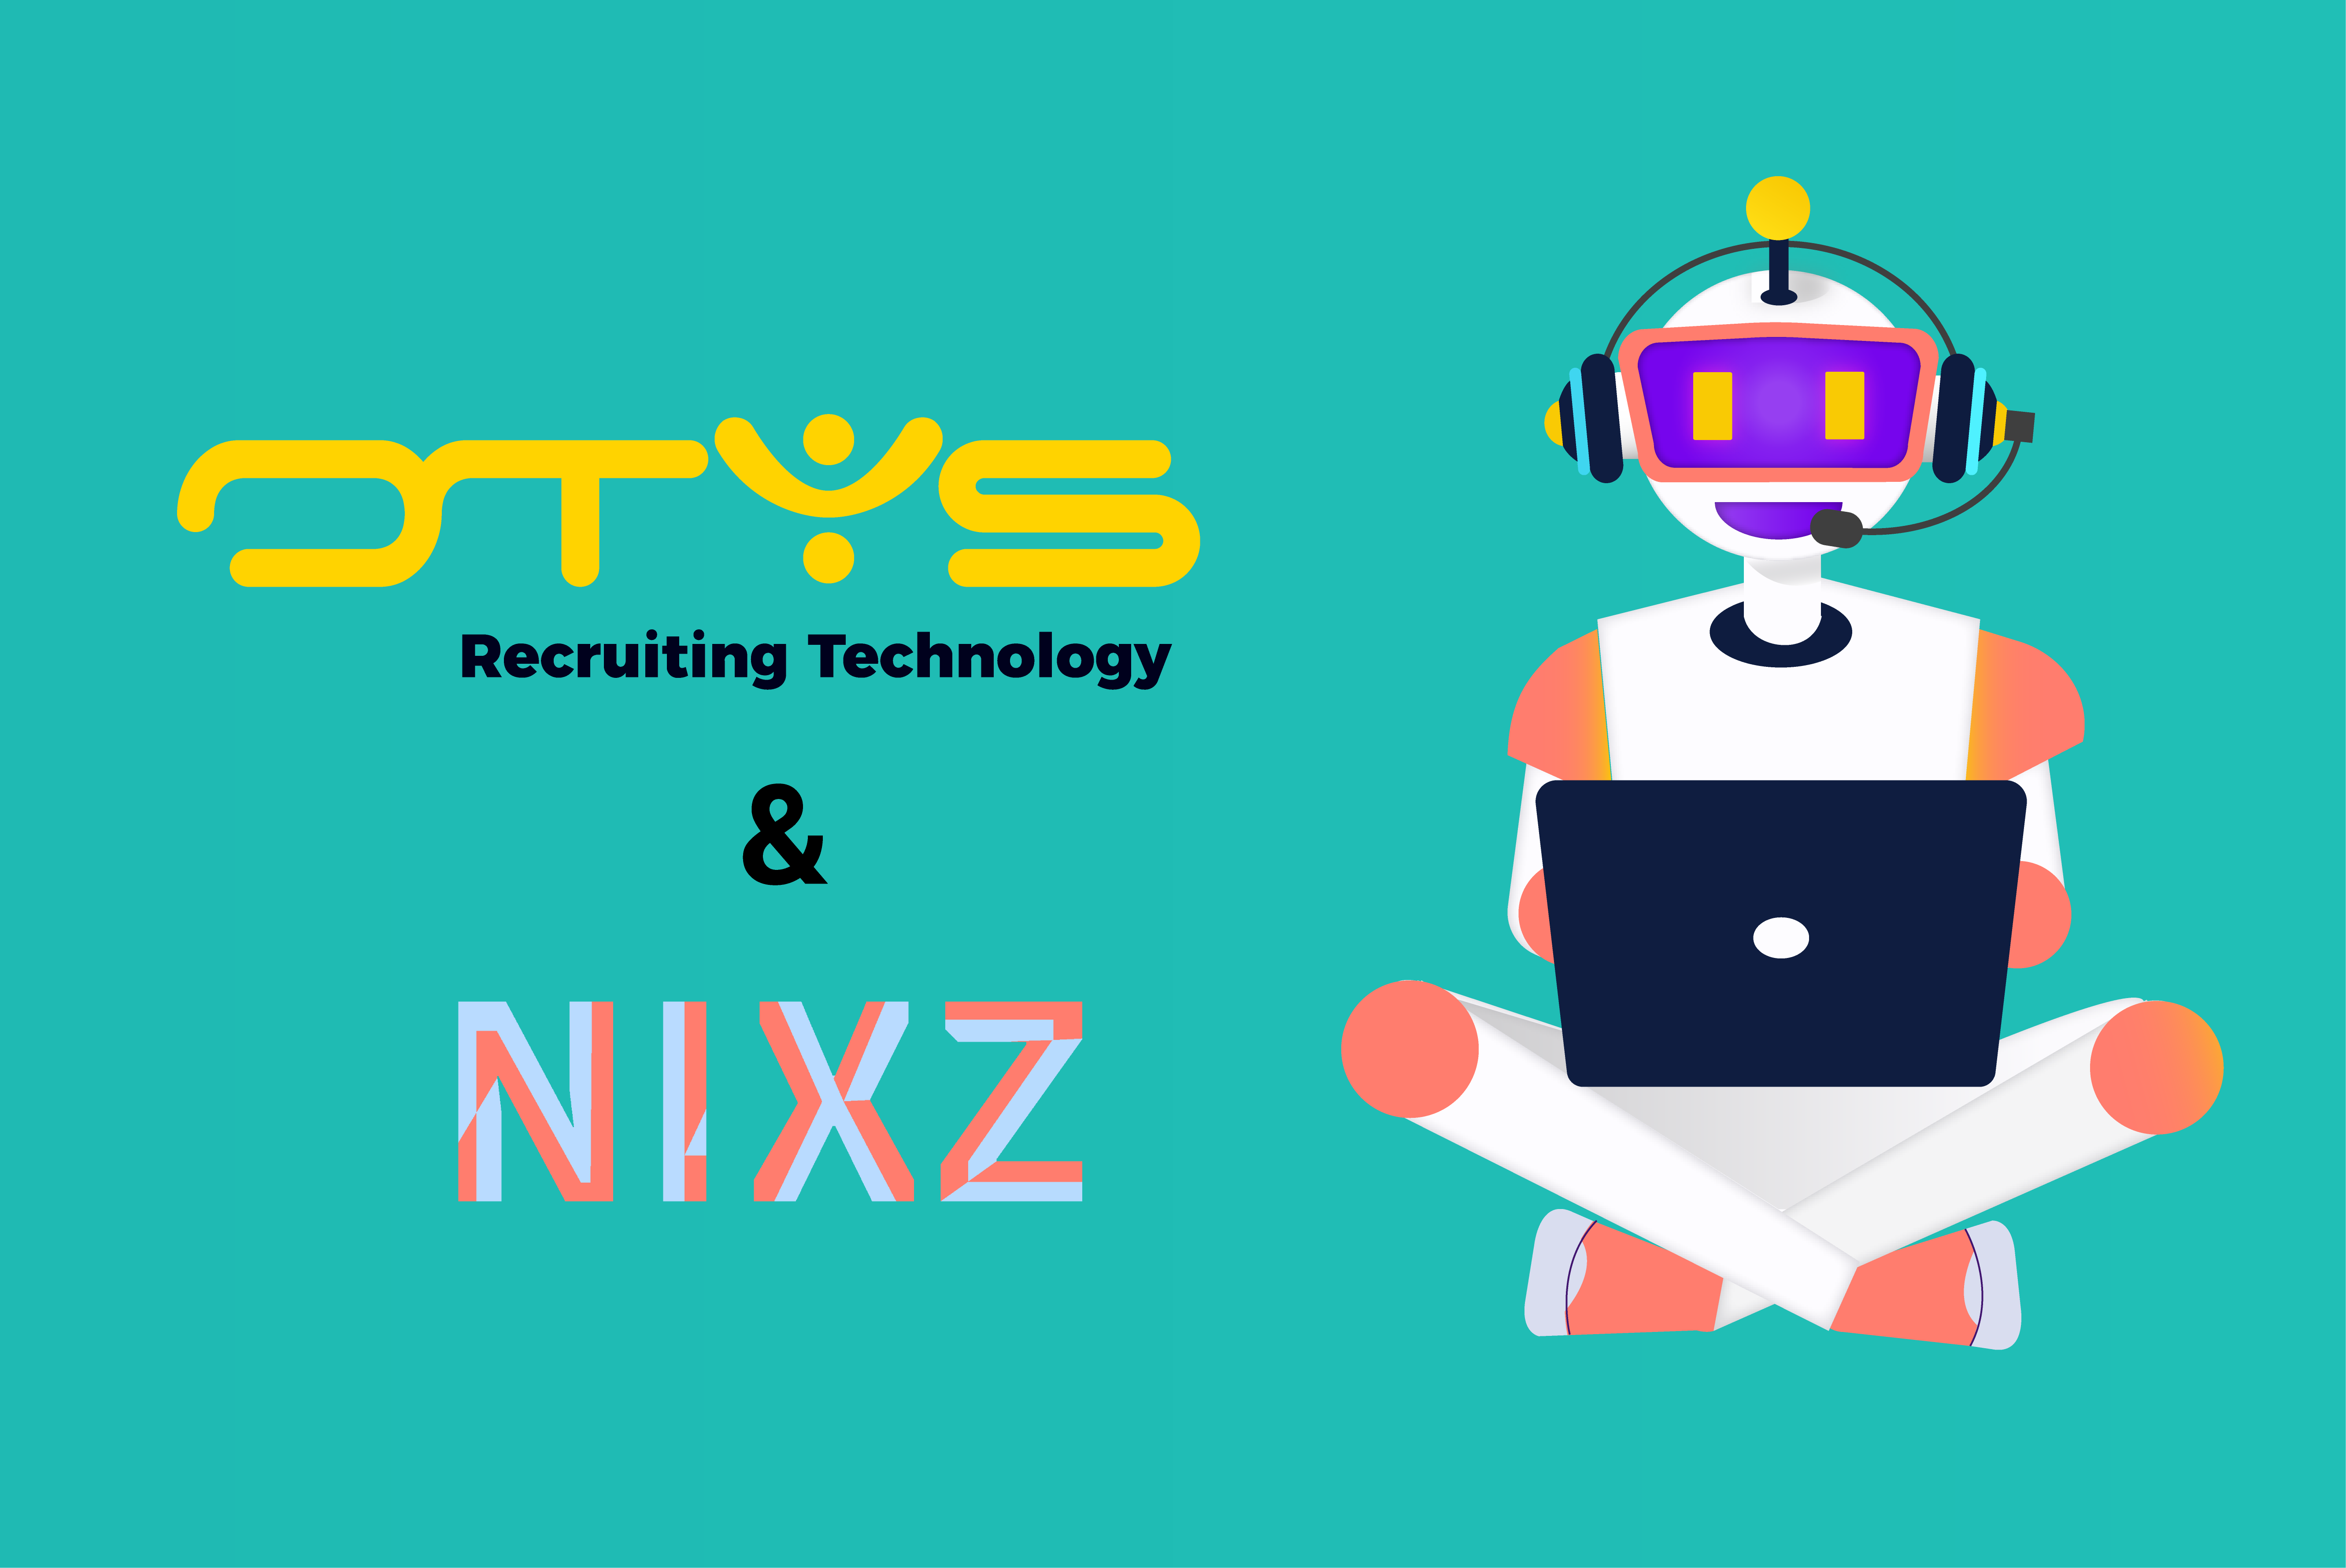 NIXZ doet steeds meer met OTYS